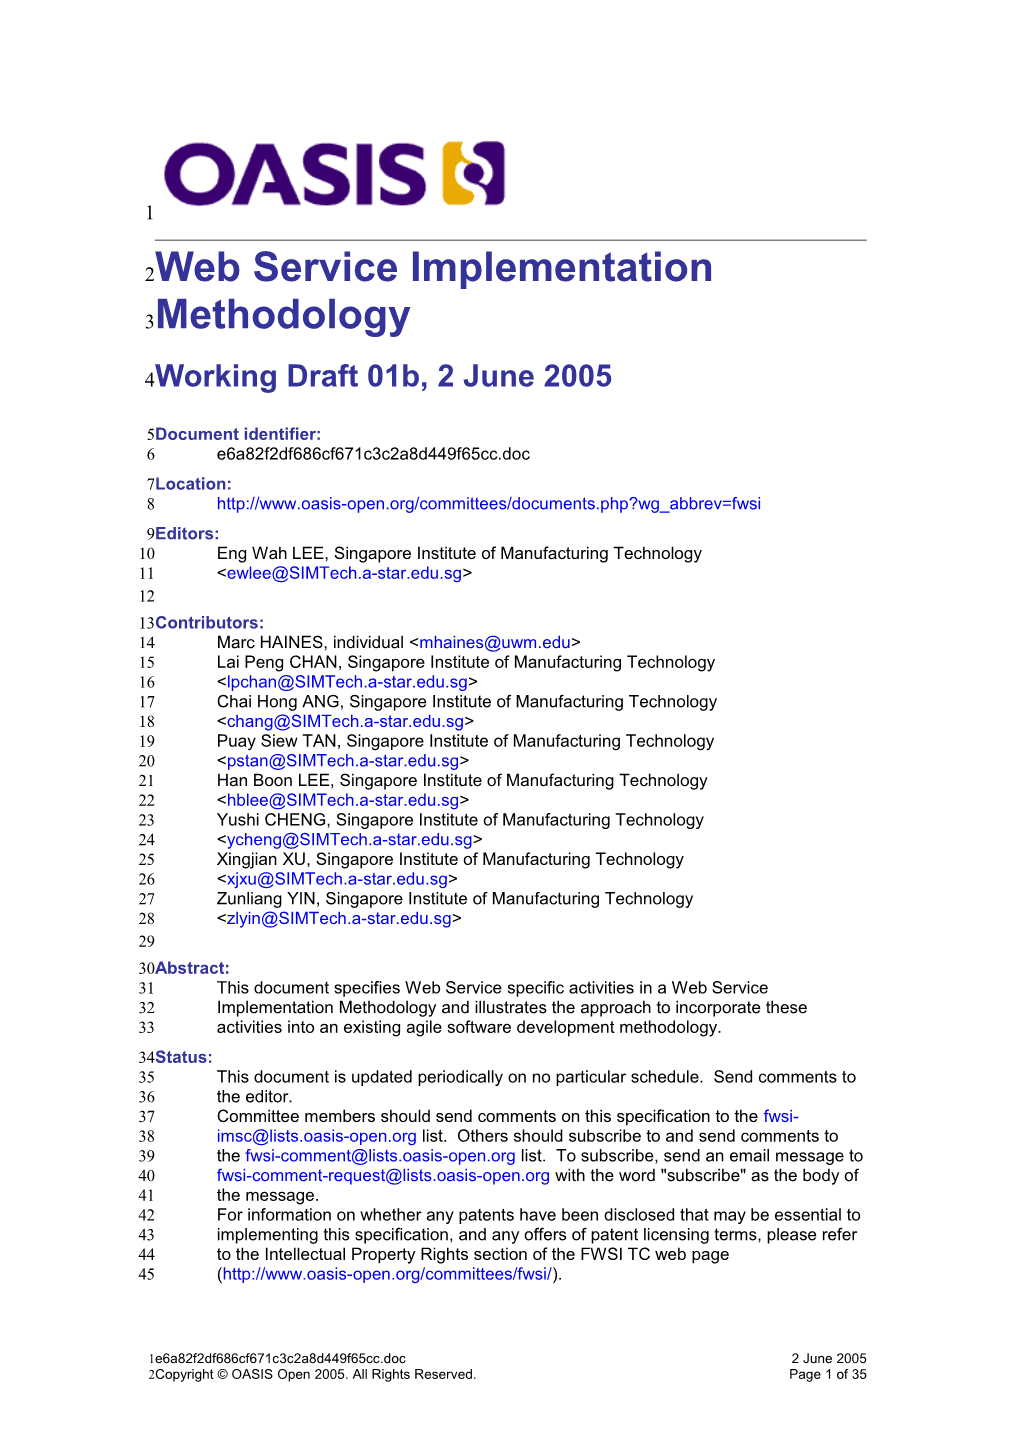 Web Service Implementation Methodology